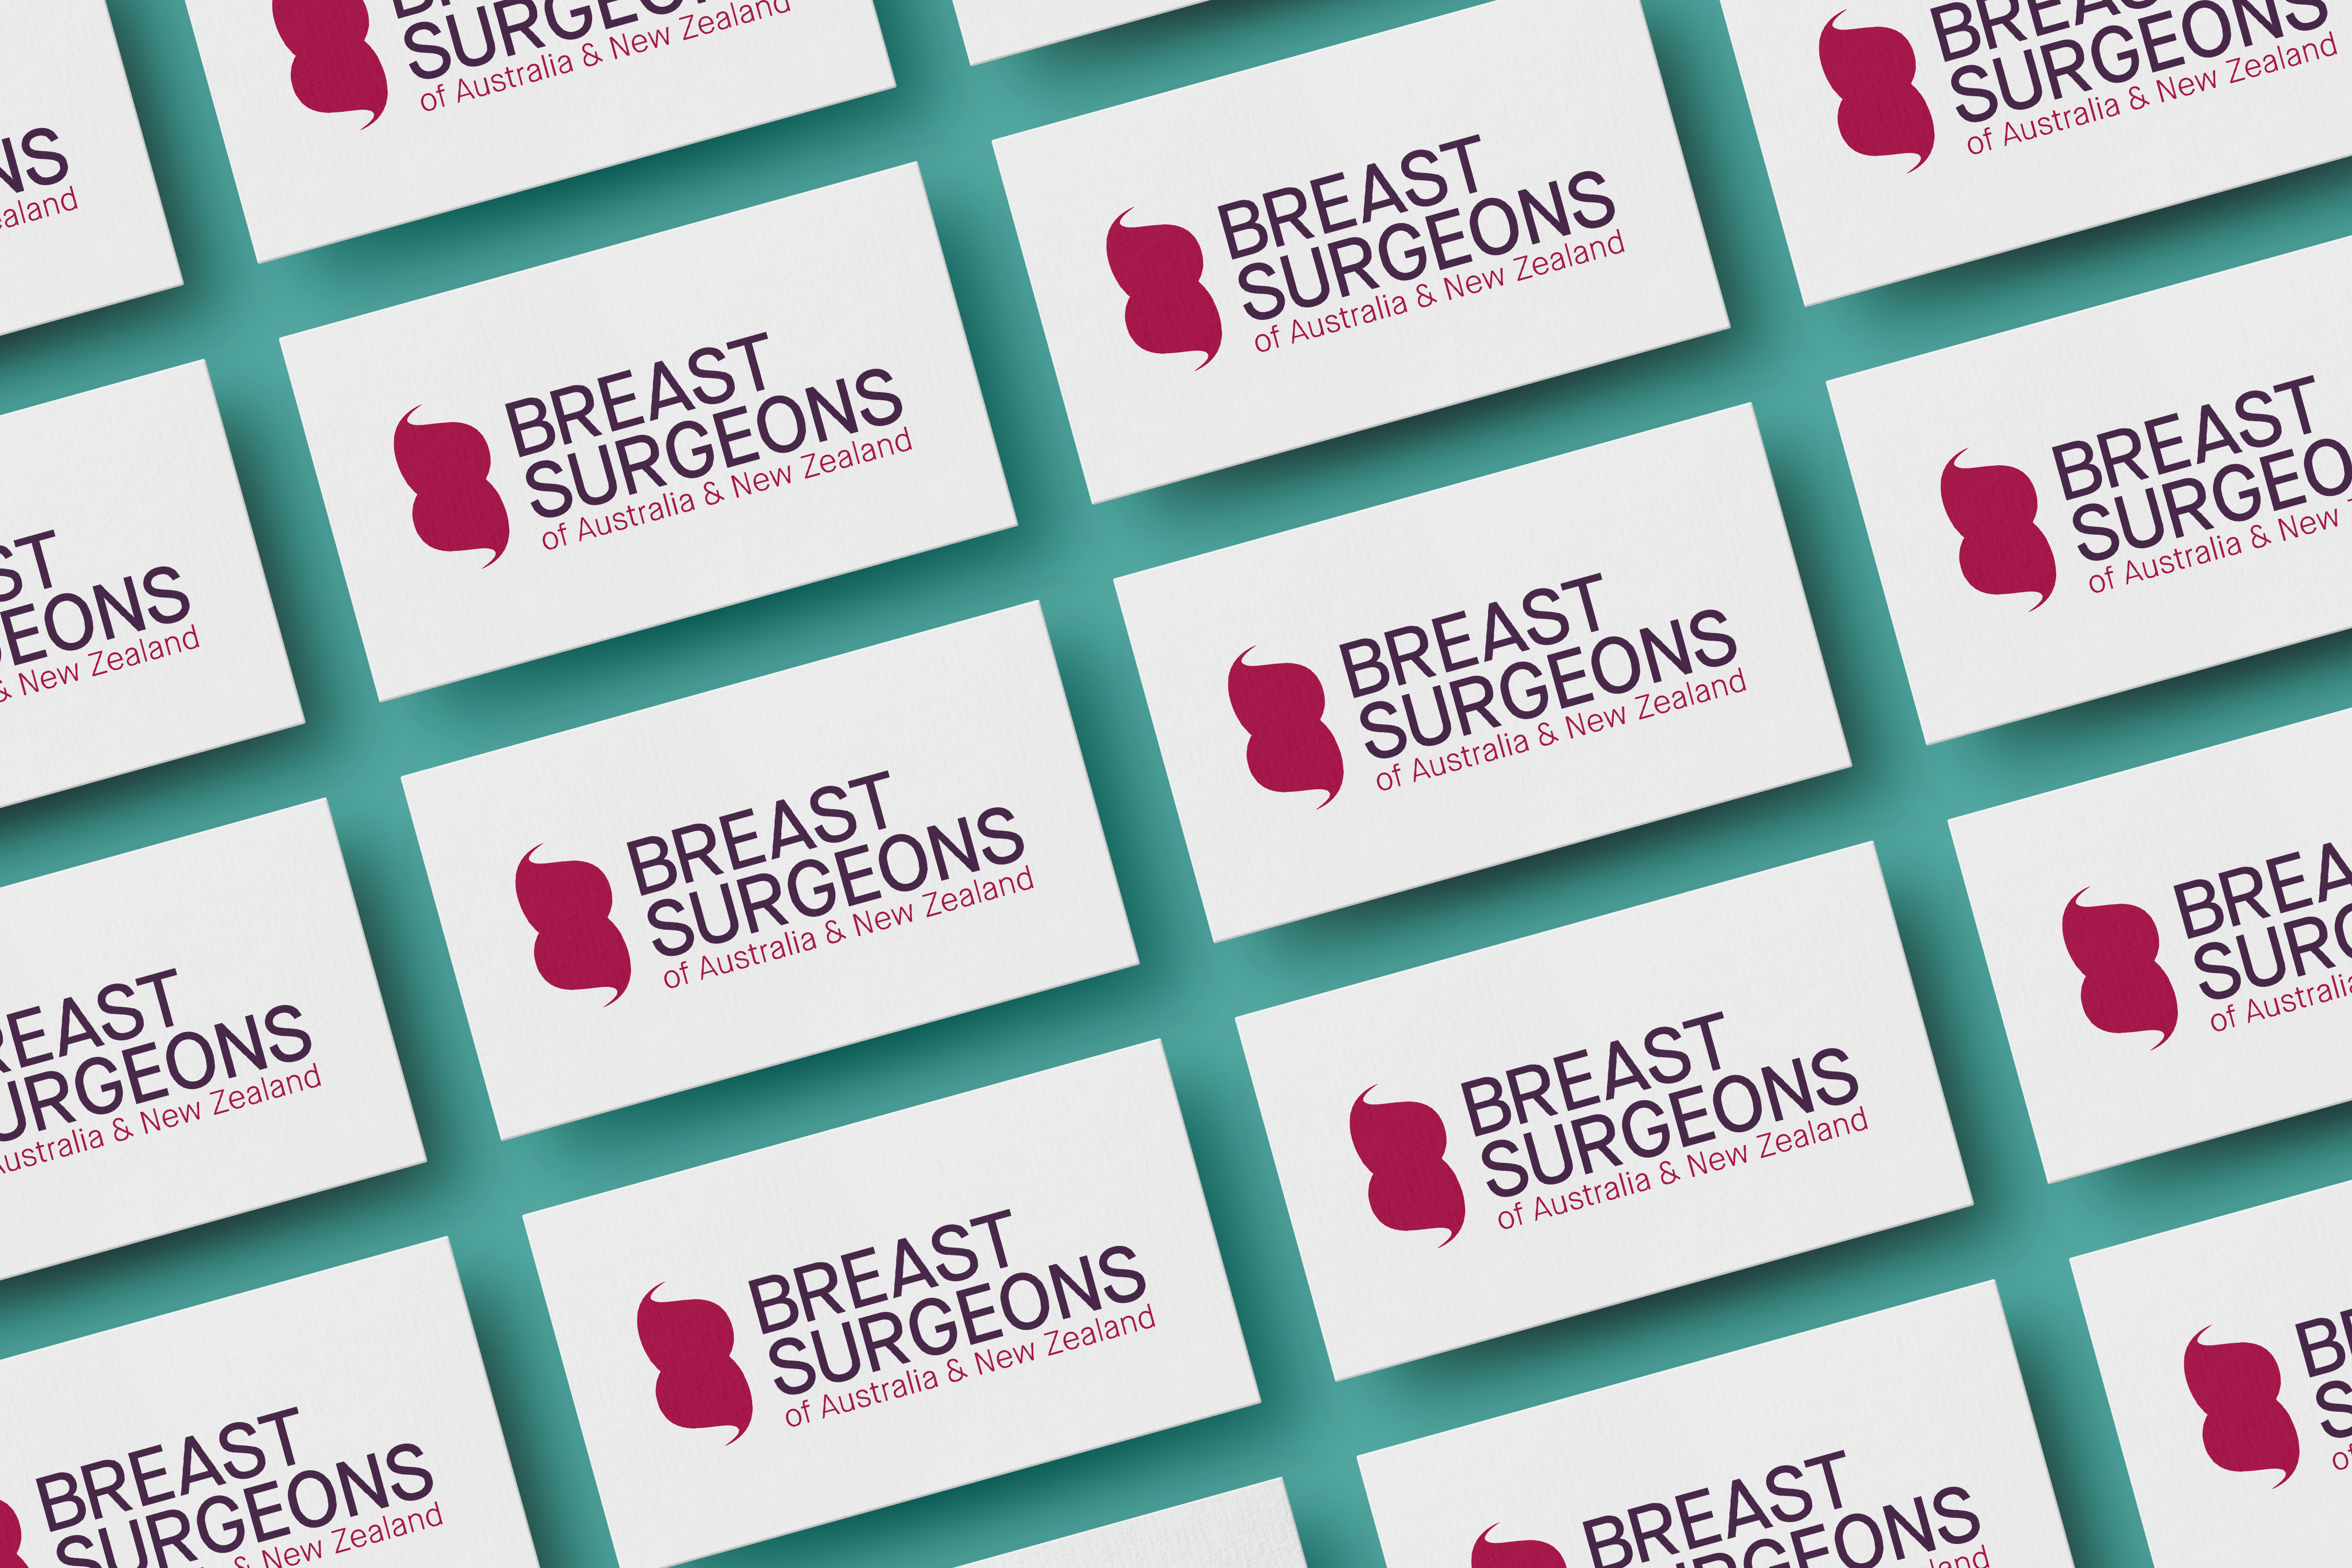 Breast Surgeons of Australia & New Zealand